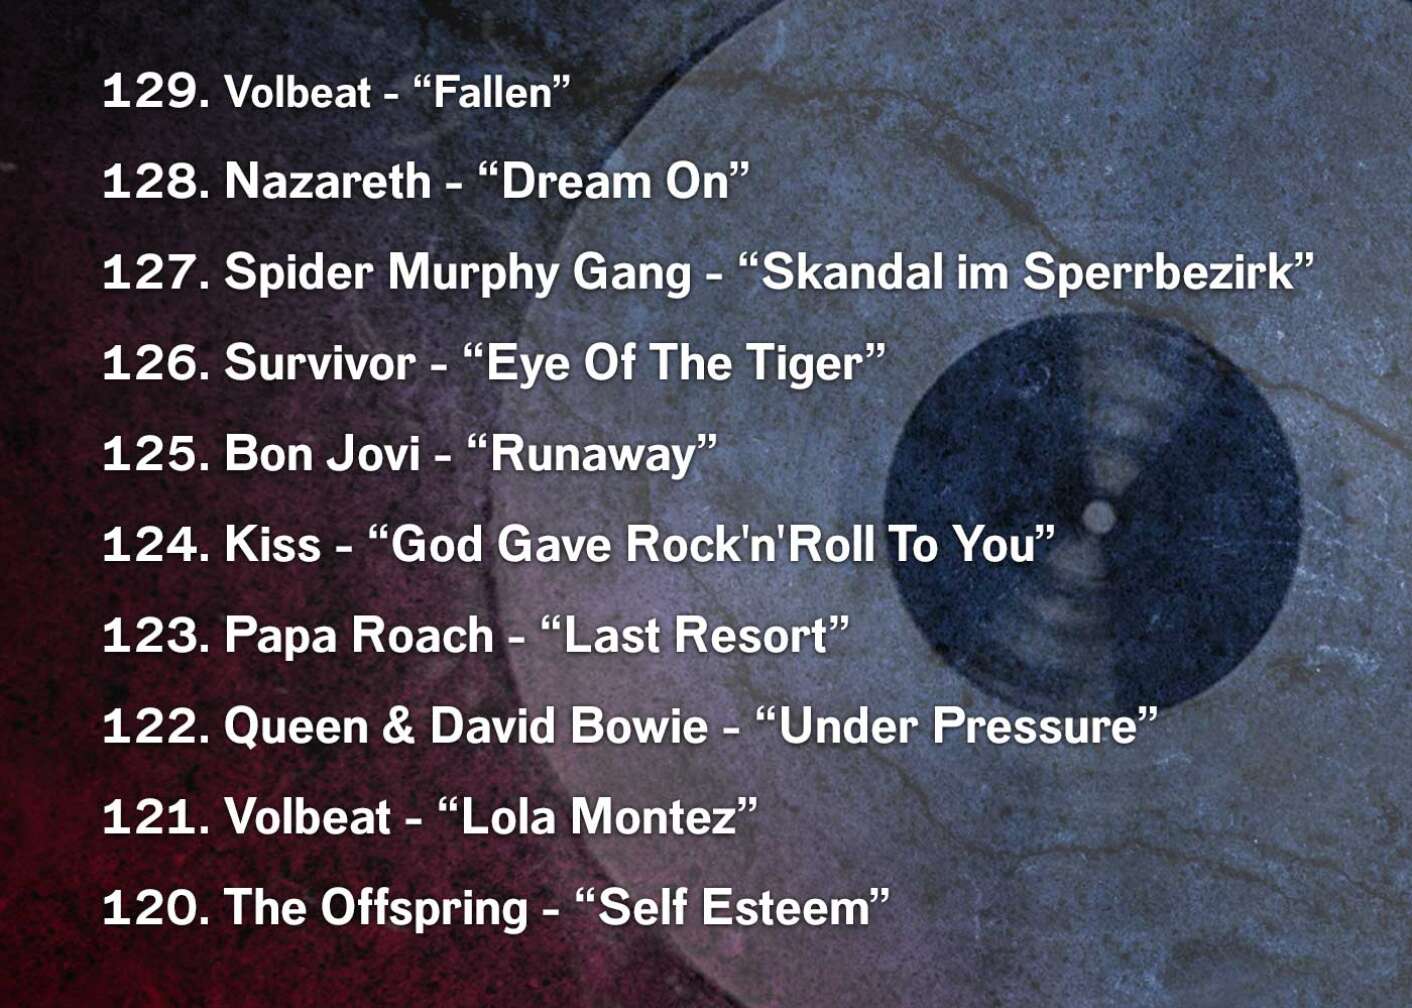 129. Volbeat - “Fallen” 128. Nazareth - “Dream On” 127. Spider Murphy Gang - “Skandal im Sperrbezirk” 126. Survivor - “Eye Of The Tiger” 125. Bon Jovi - “Runaway” 124. Kiss - “God Gave Rock'n'Roll To You” 123. Papa Roach - “Last Resort” 122. Queen & David Bowie - “Under Pressure” 121. Volbeat - “Lola Montez” 120. The Offspring - “Self Esteem”